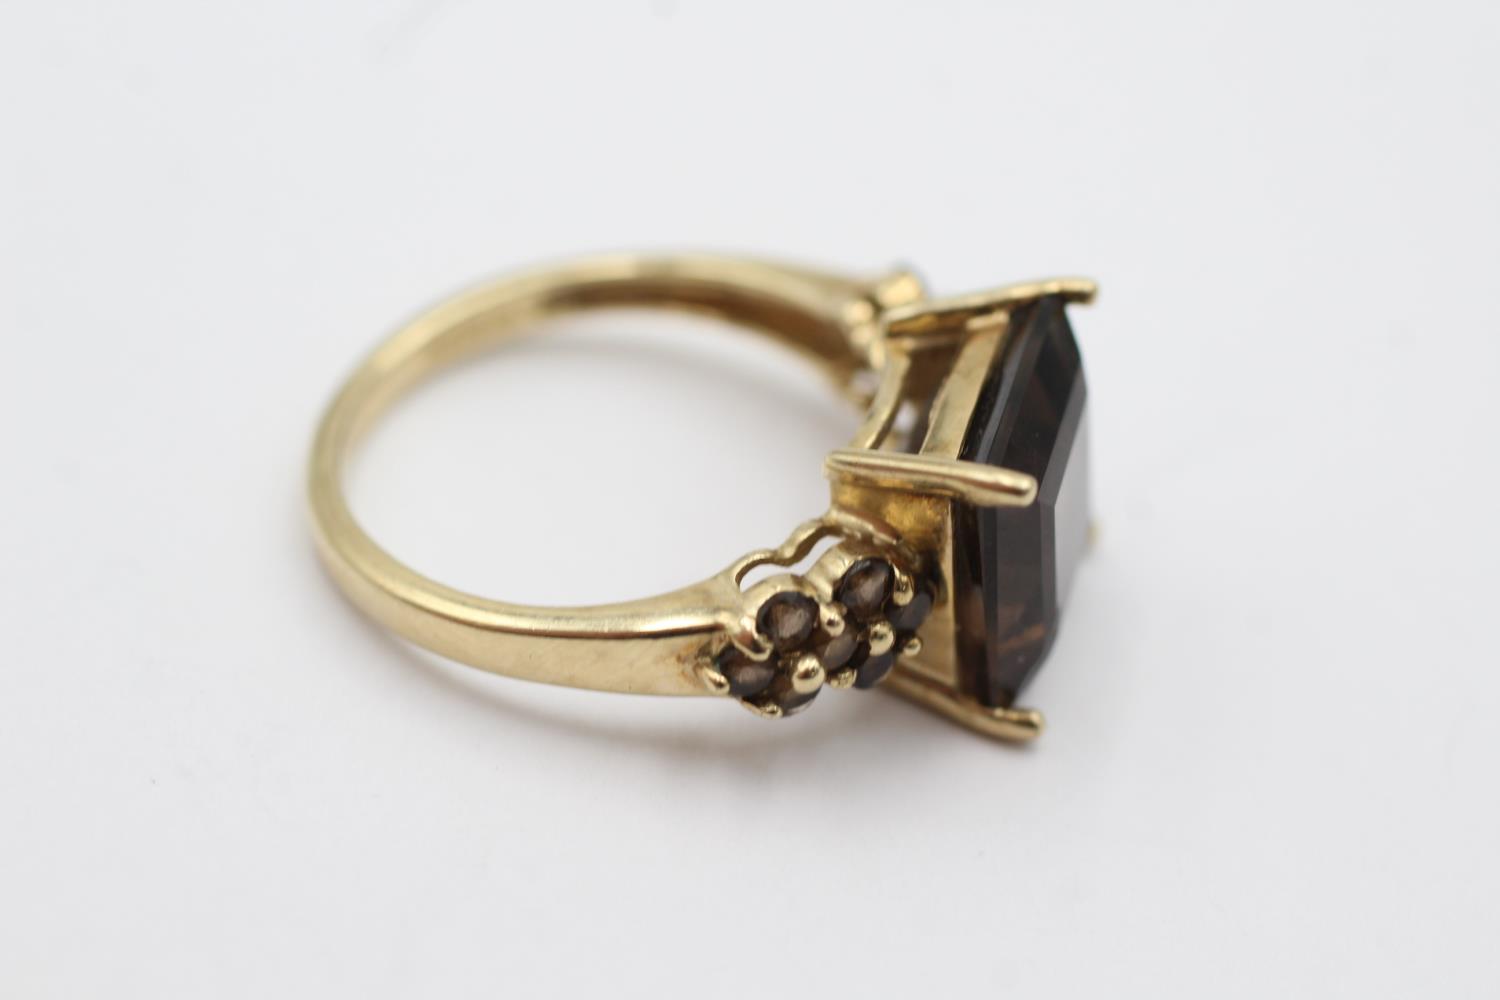 9ct gold smokey quartz dress ring (3.5g) Size O - Image 2 of 4